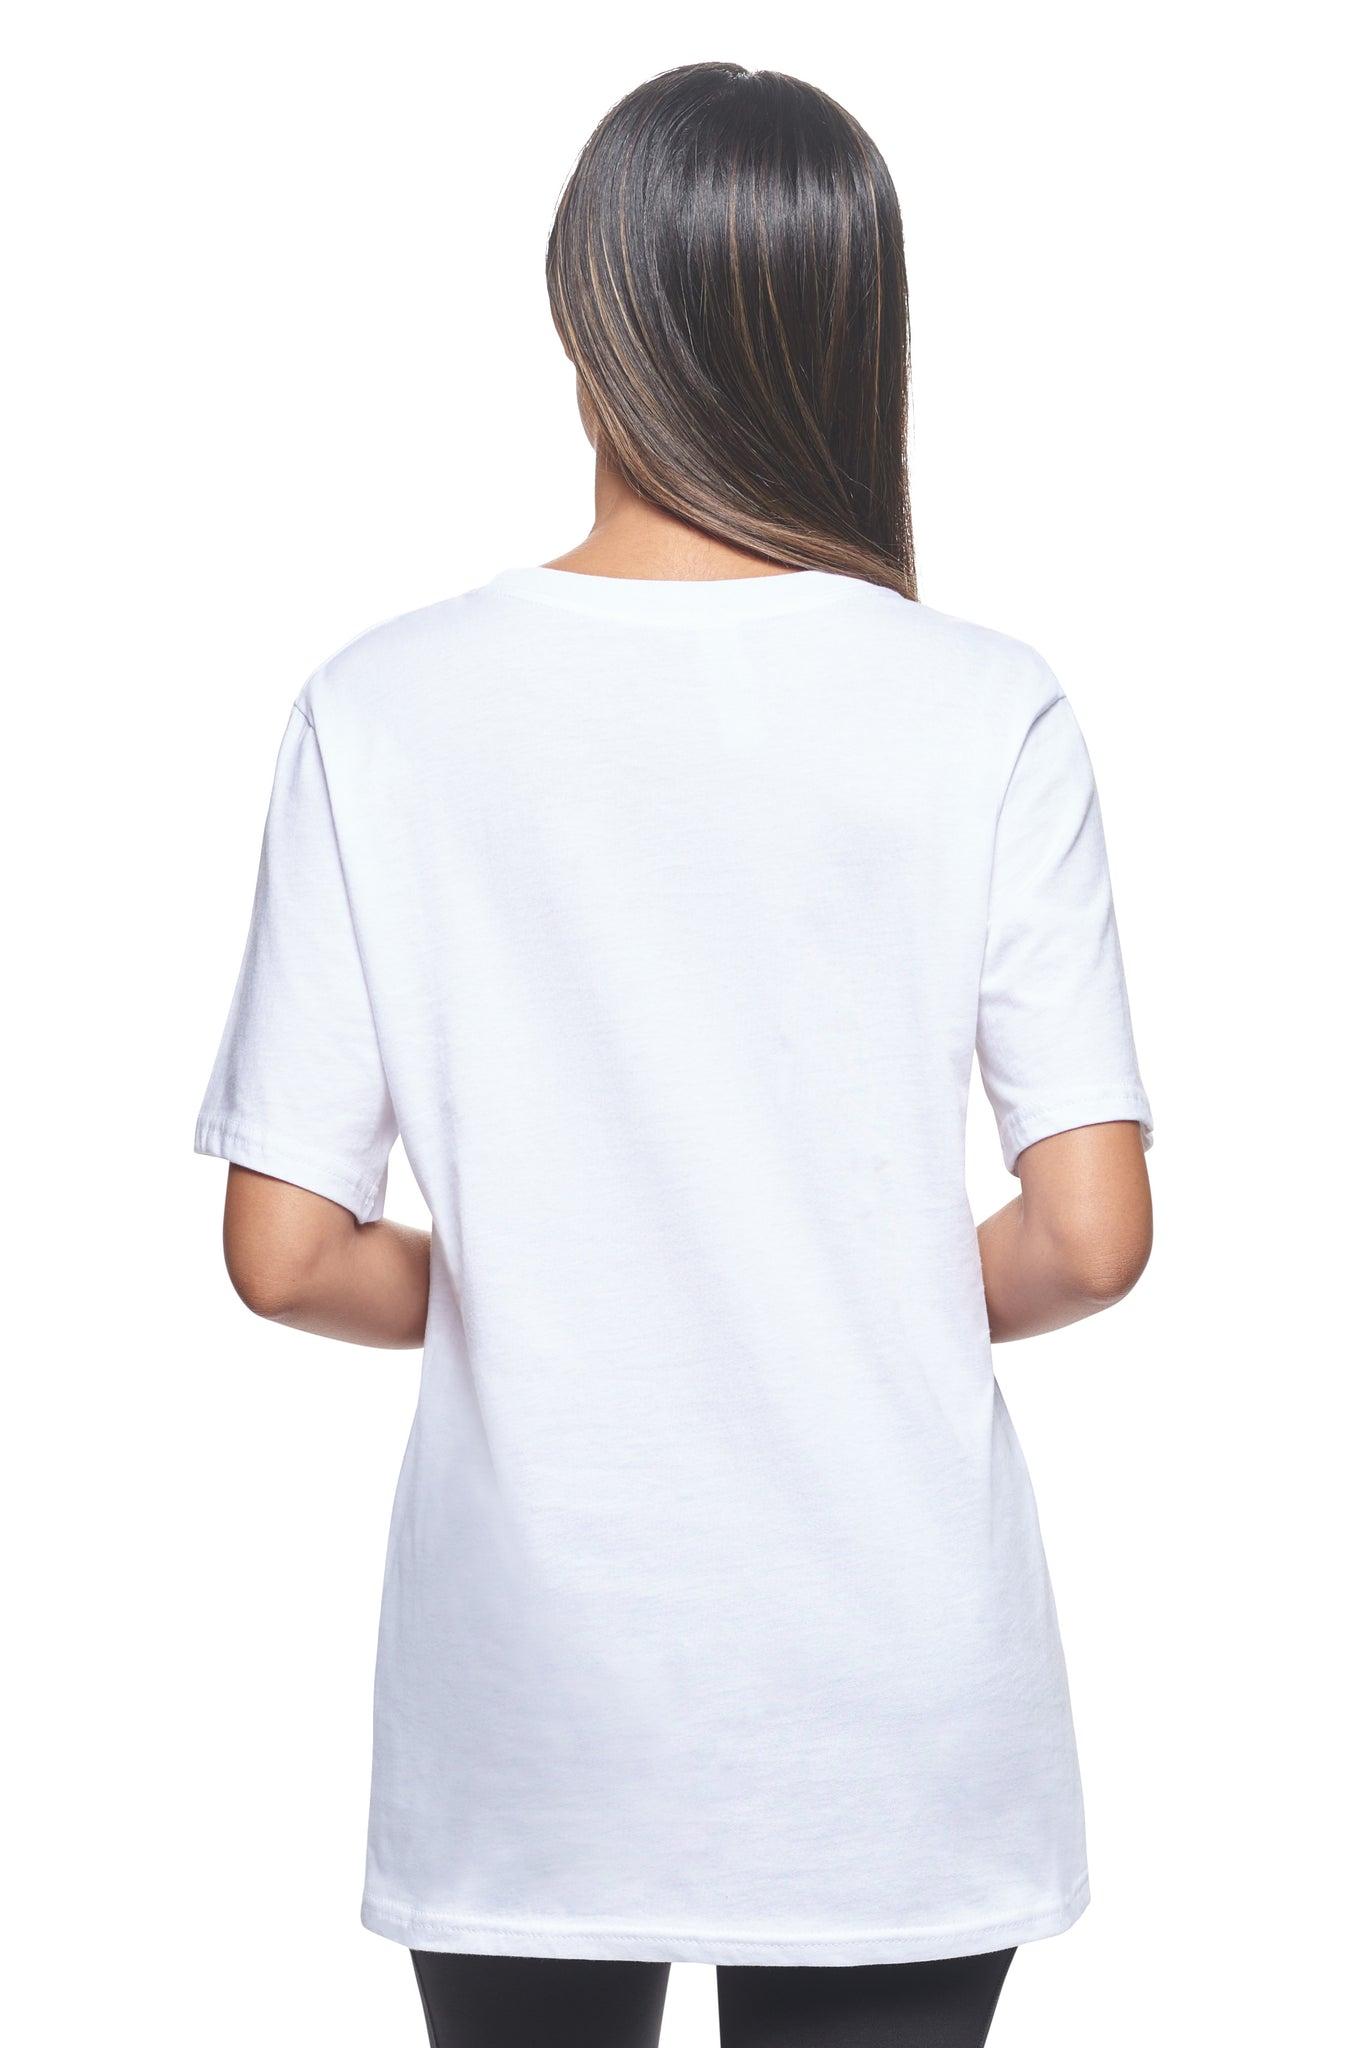 Expert Brand Wholesale Unisex women Organic Cotton T-Shirt Made in USA in Nova white 3#white